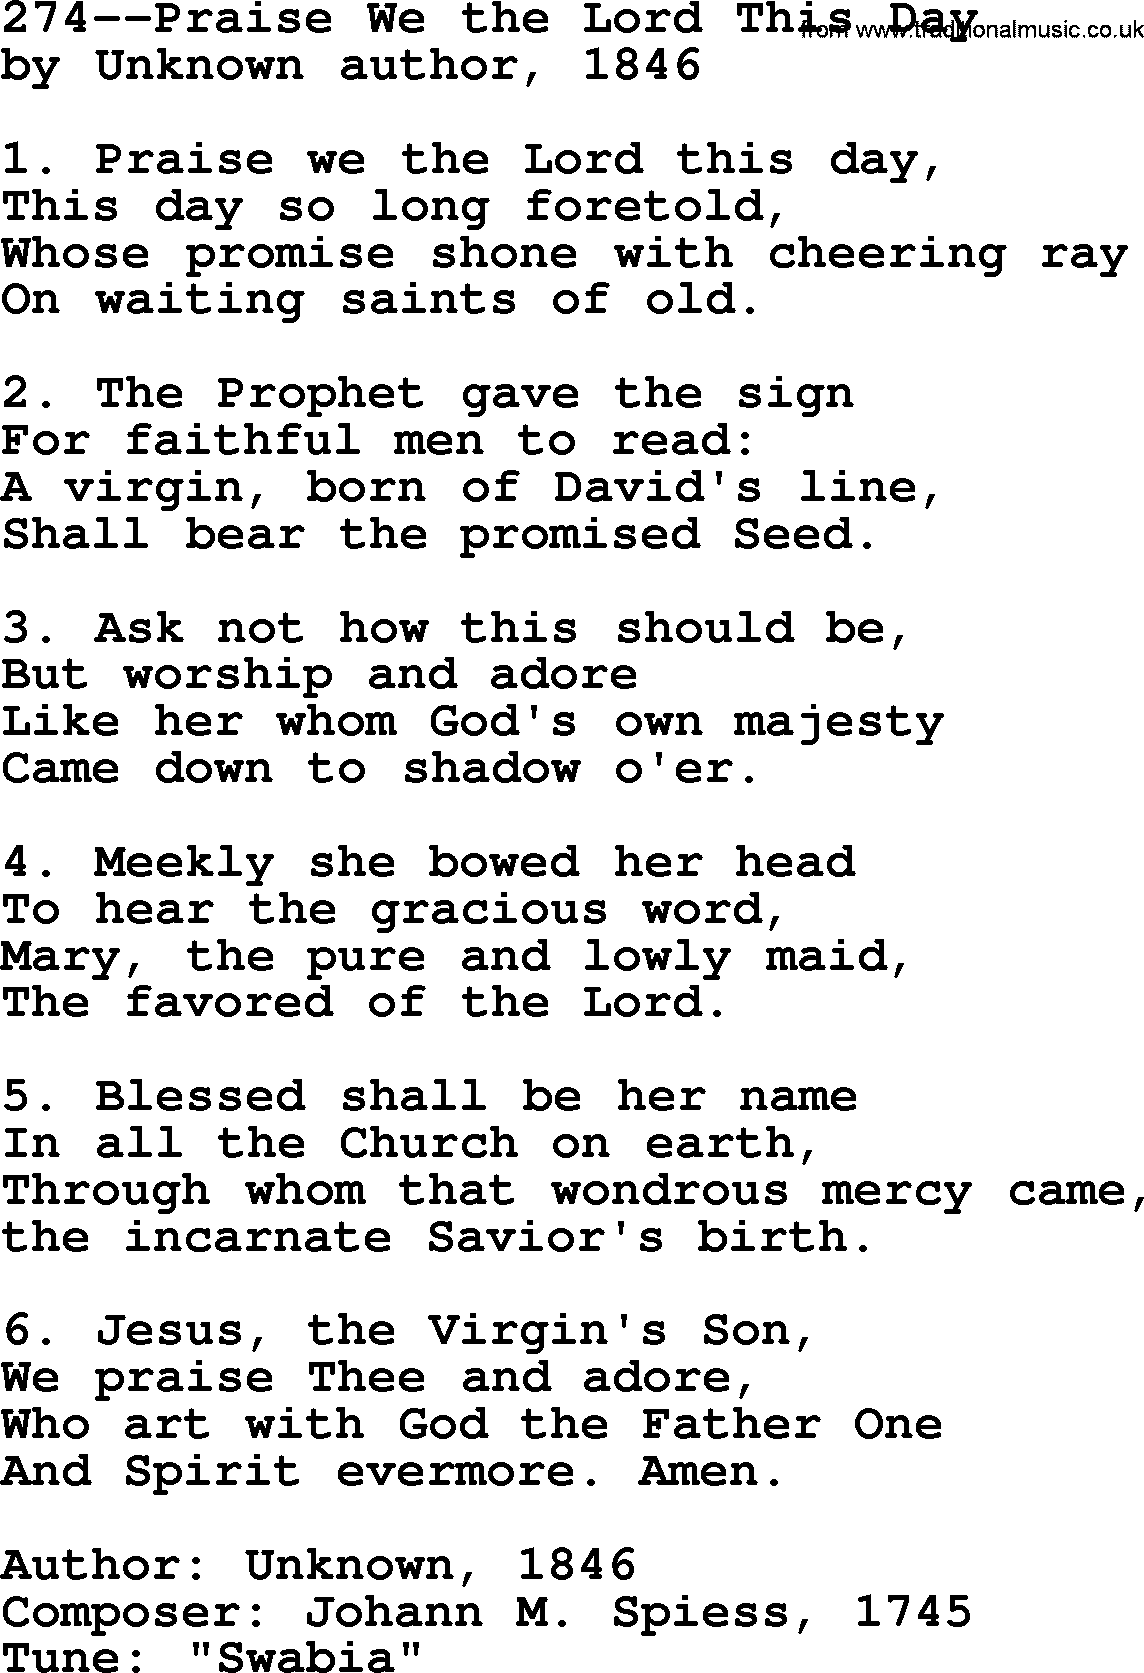 Lutheran Hymn: 274--Praise We the Lord This Day.txt lyrics with PDF